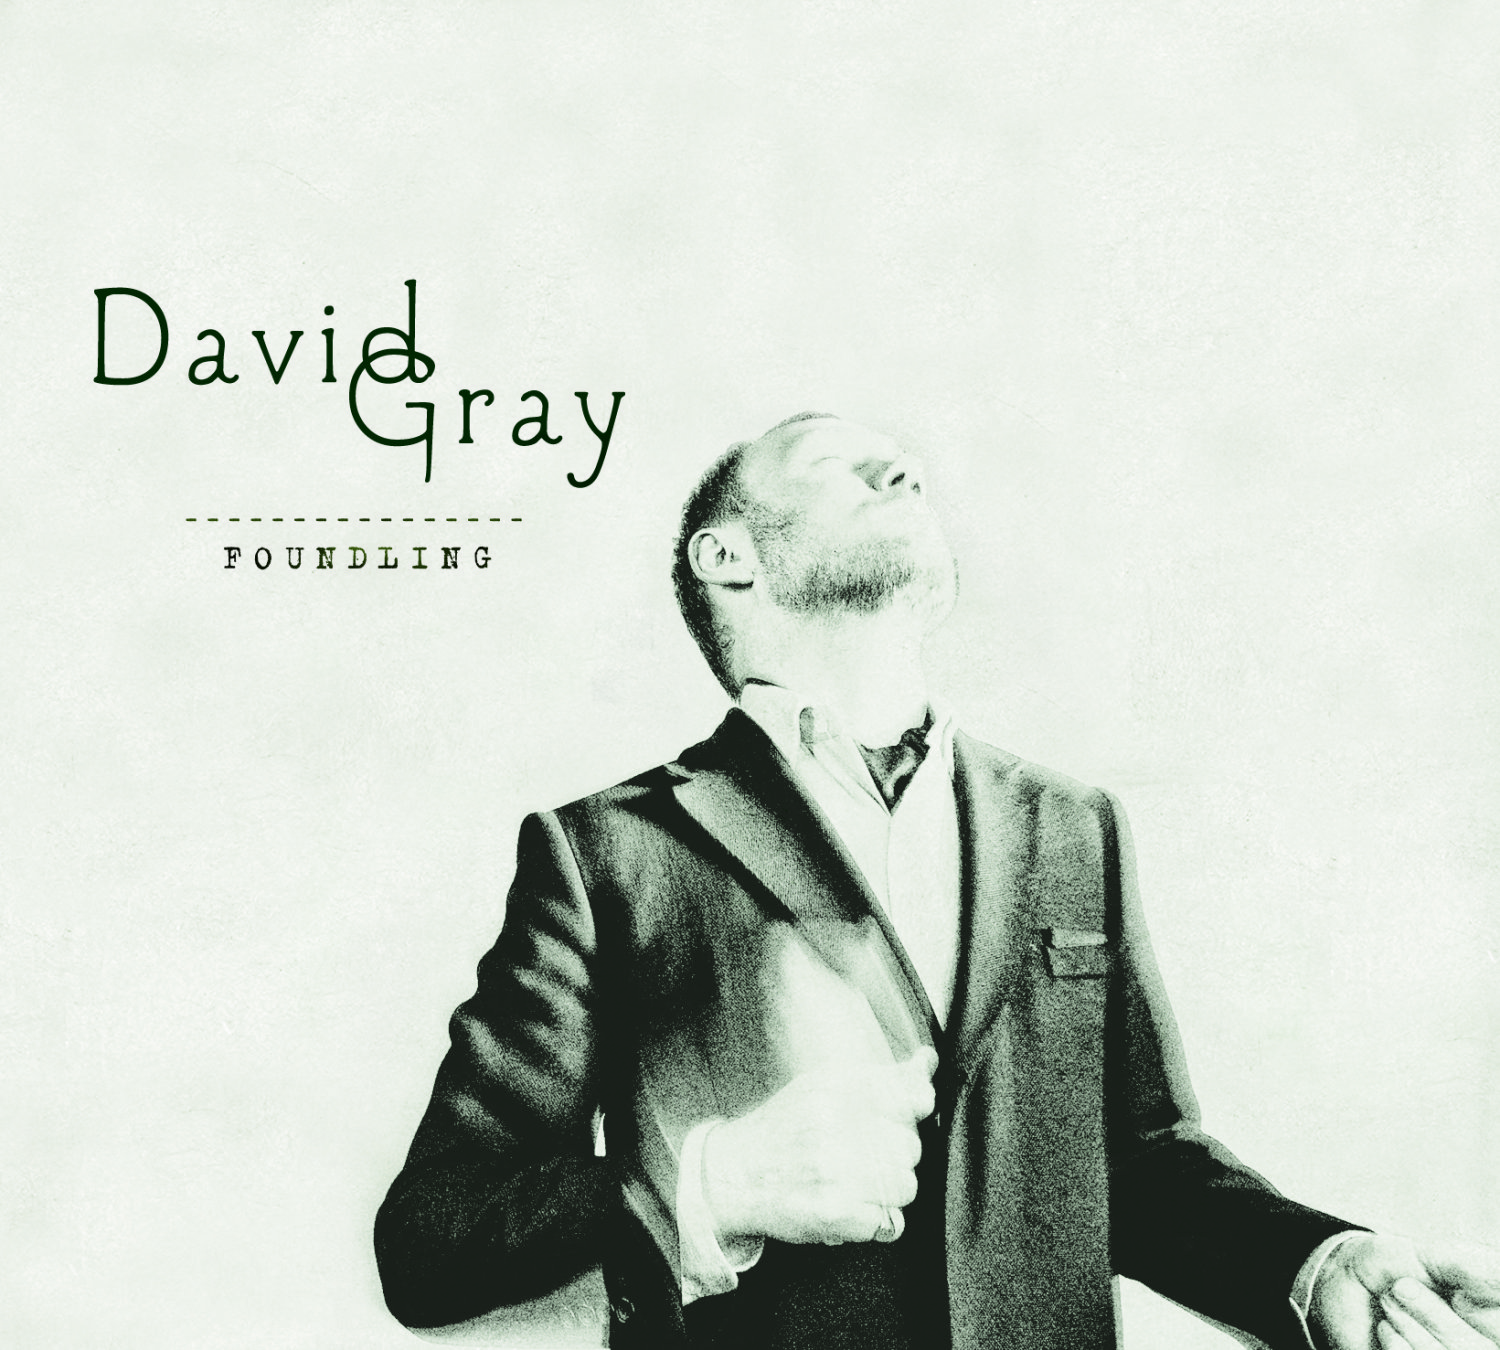 david gray foundling